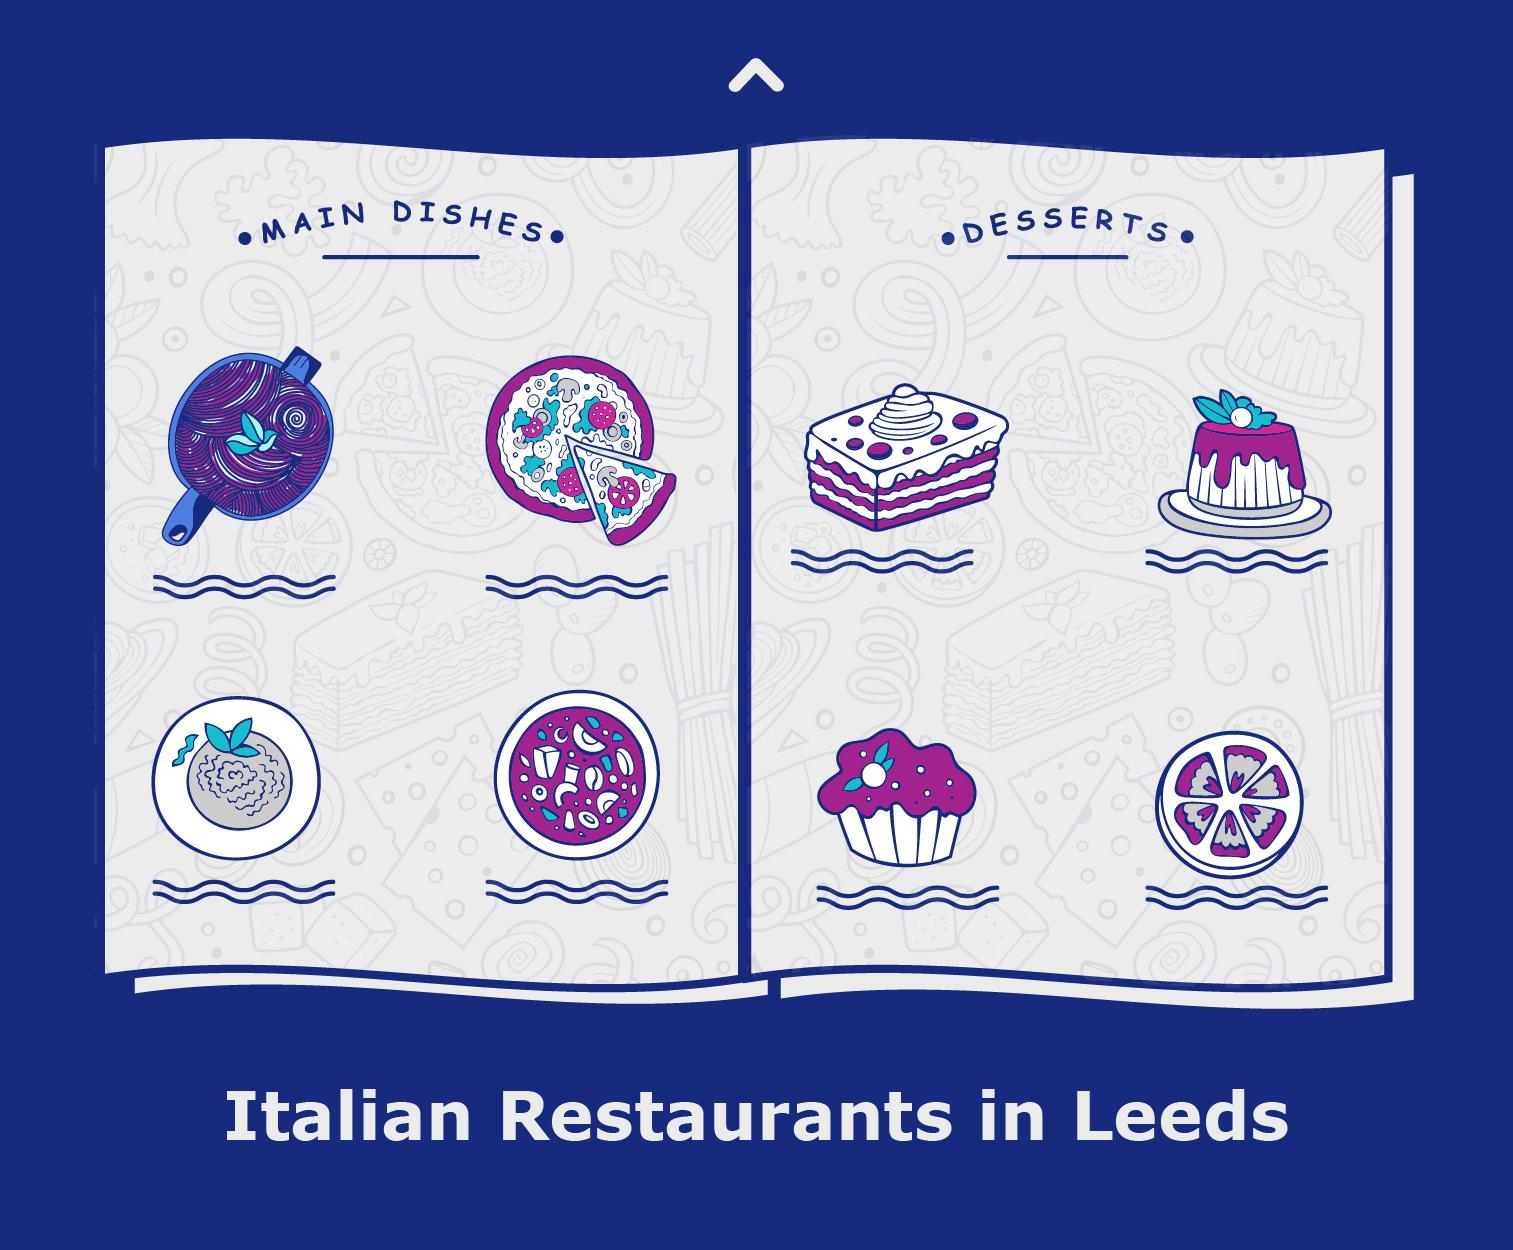 What Are the Best Italian Restaurants in Leeds?